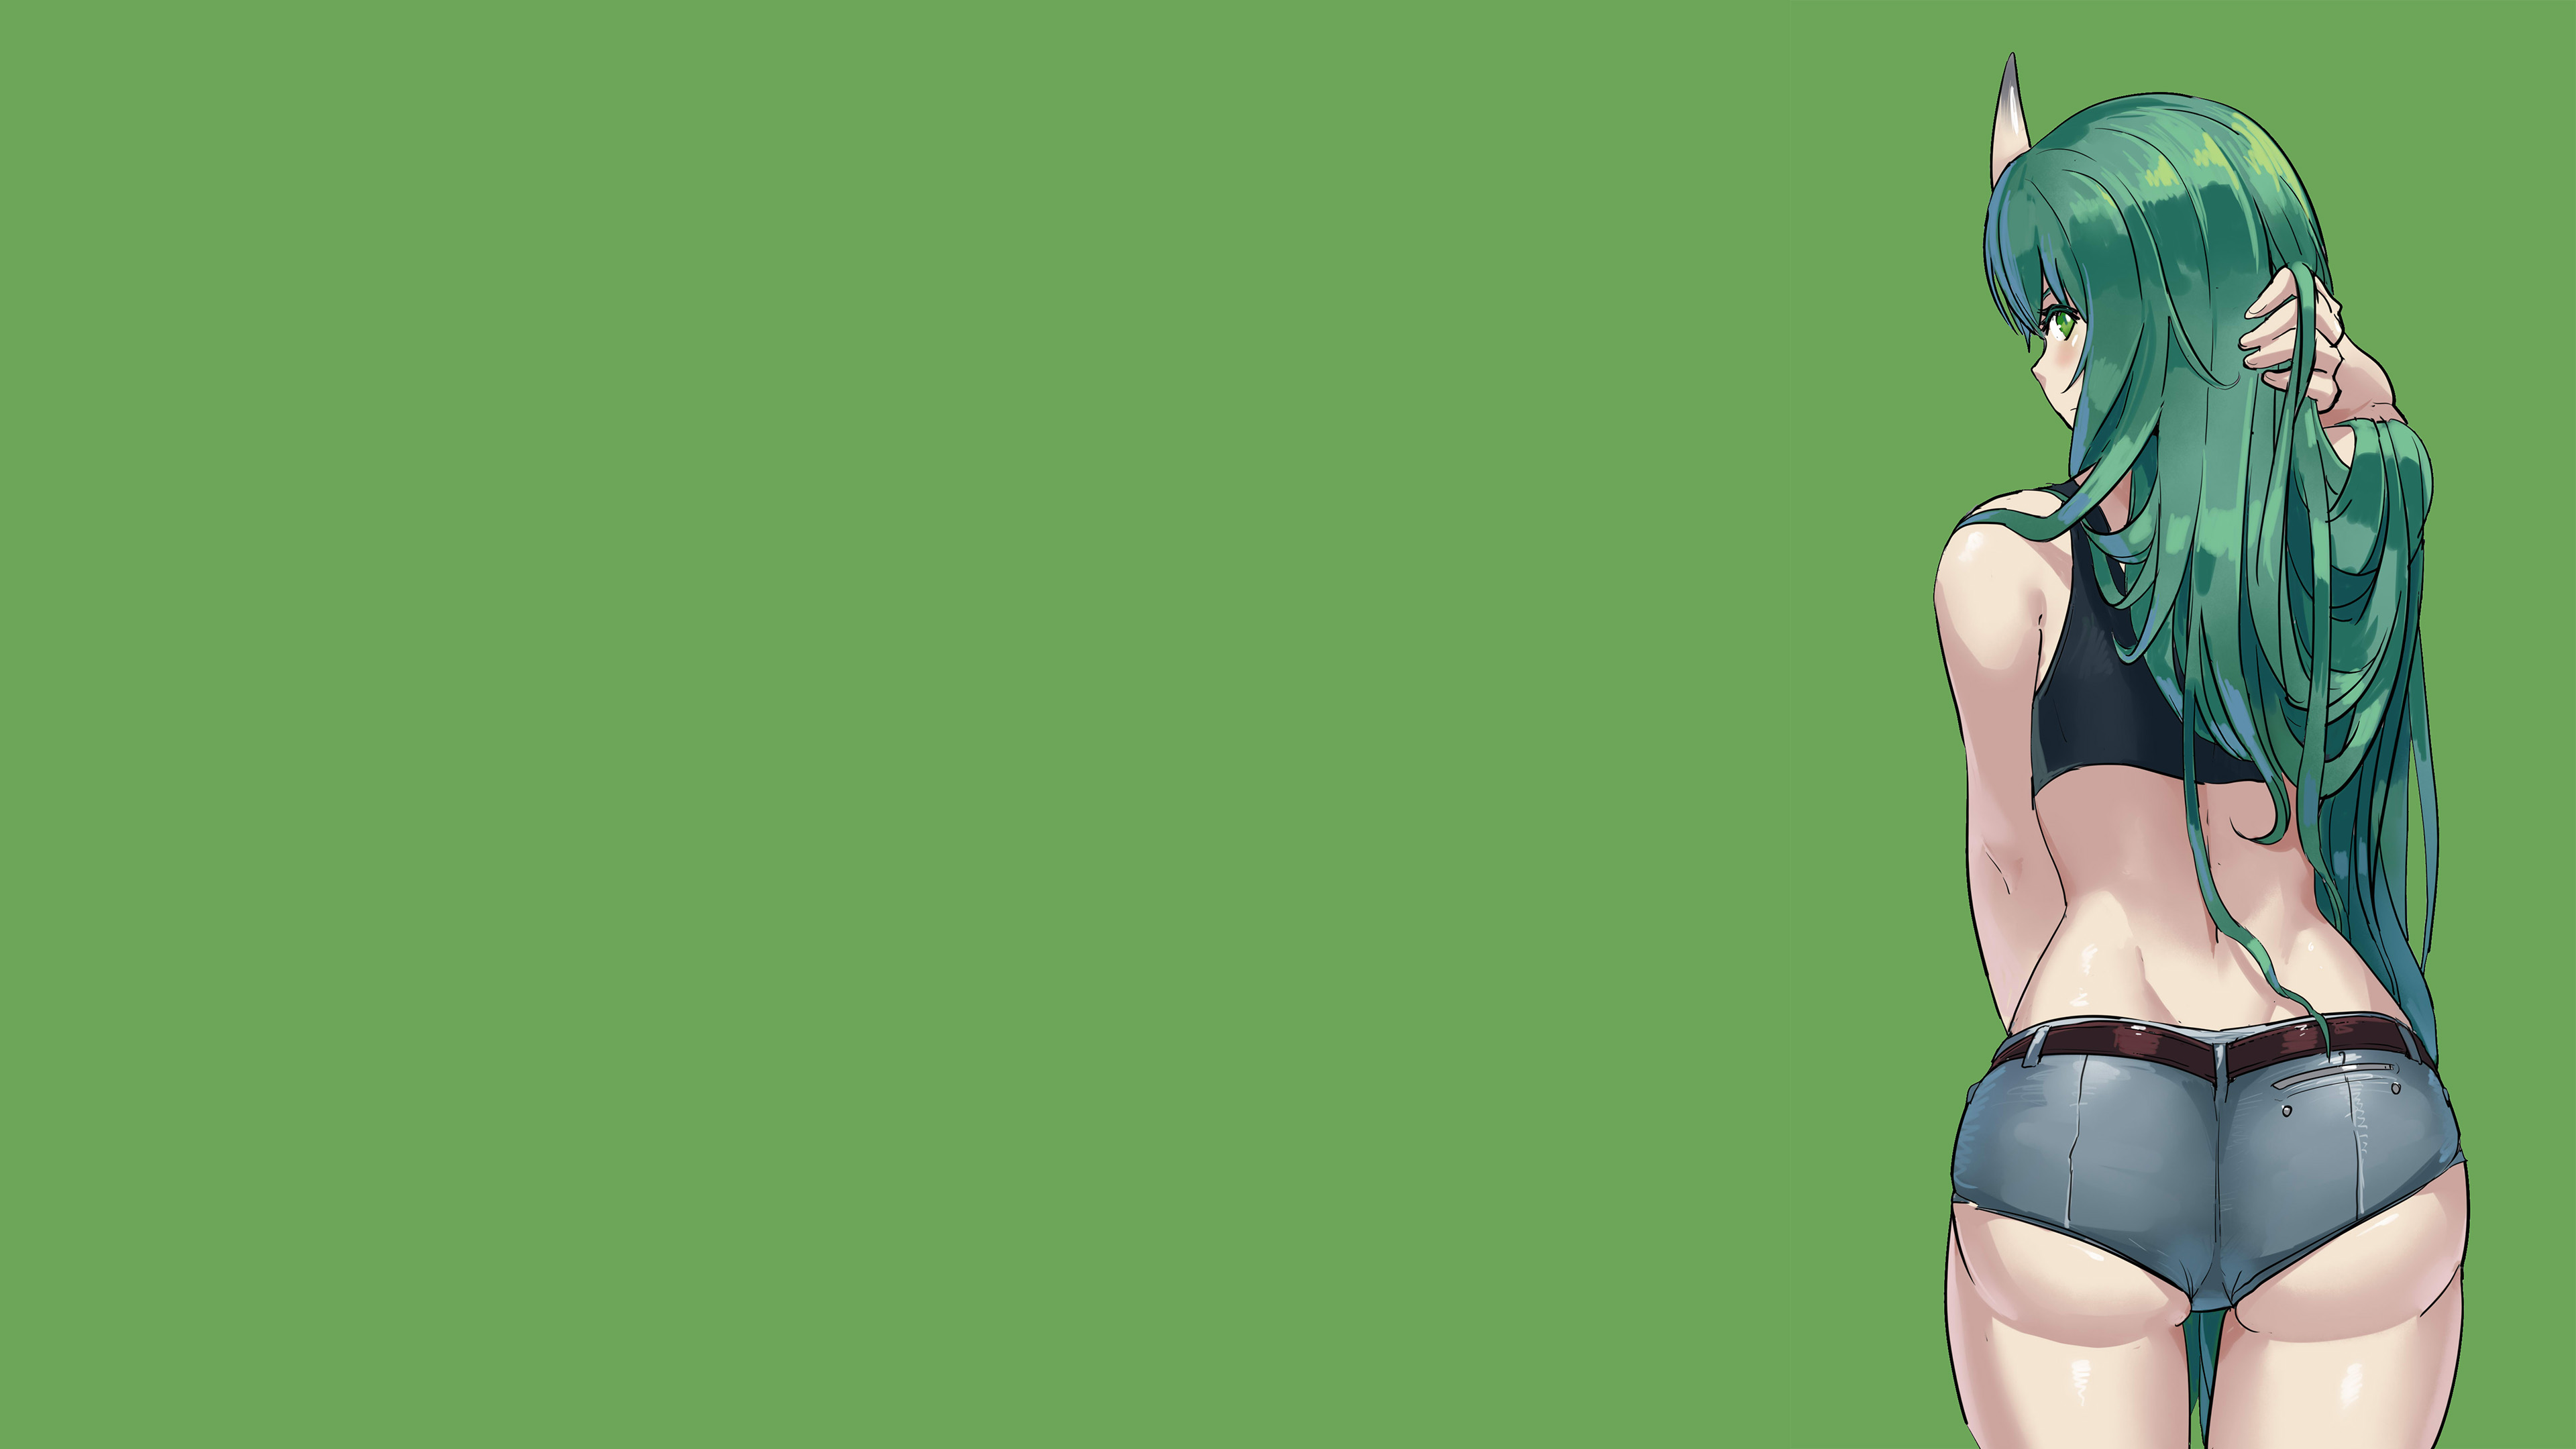 Anime 3840x2160 Arknights Shizouxing Kof Hoshiguma (Arknights) green background ass green hair standing anime girls anime long hair booty shorts